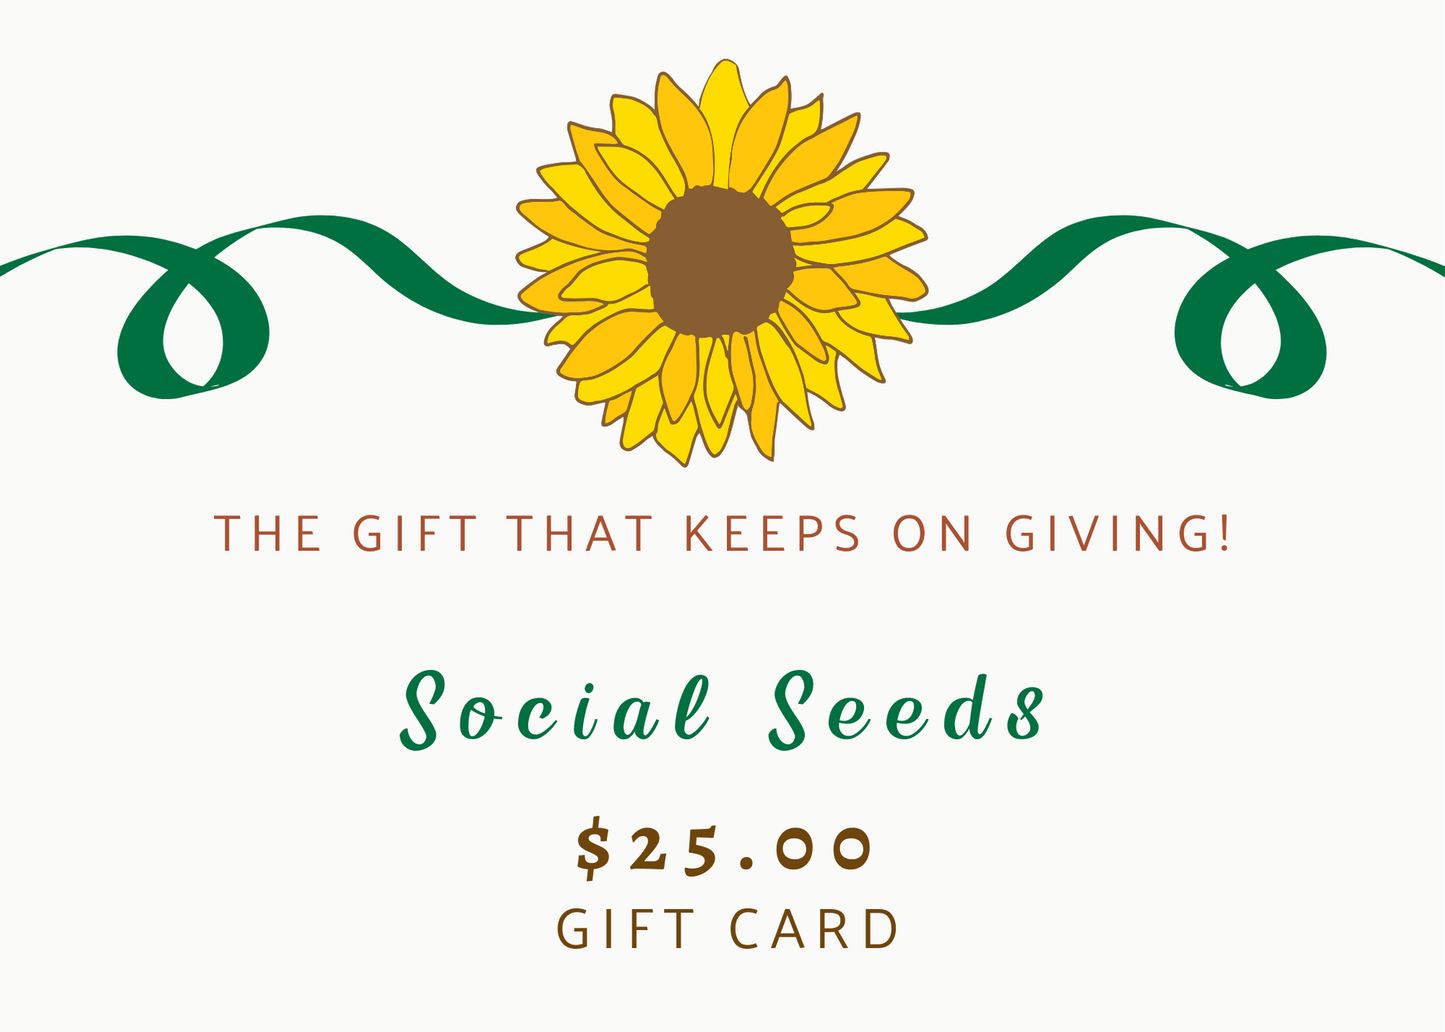 Social Seeds - Gift Cards - Social Seeds